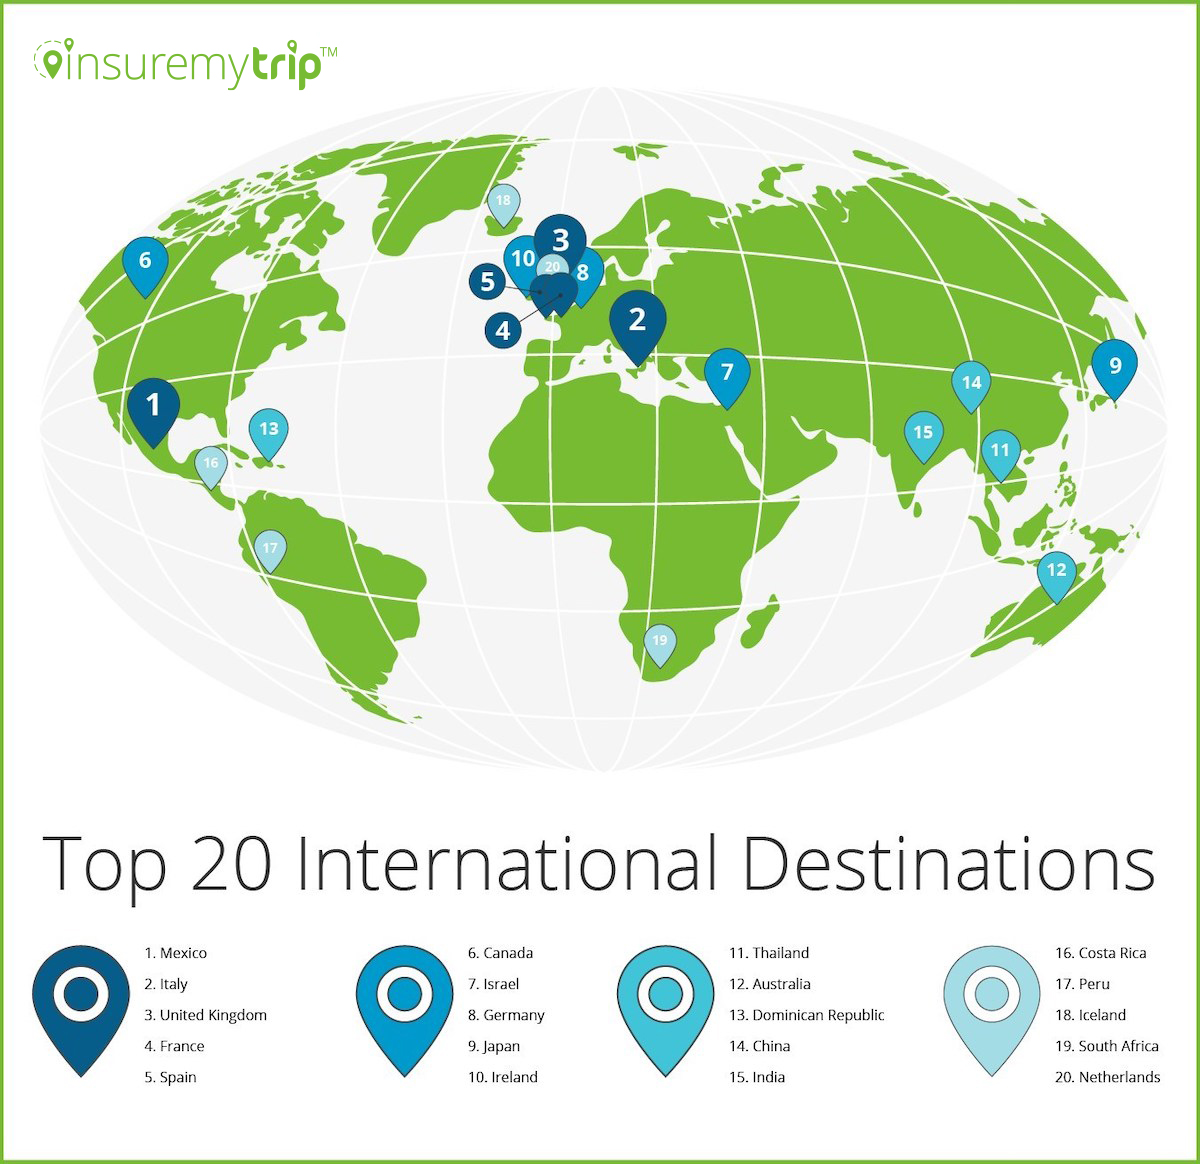 Top 20 International Travel Destinations for 2019